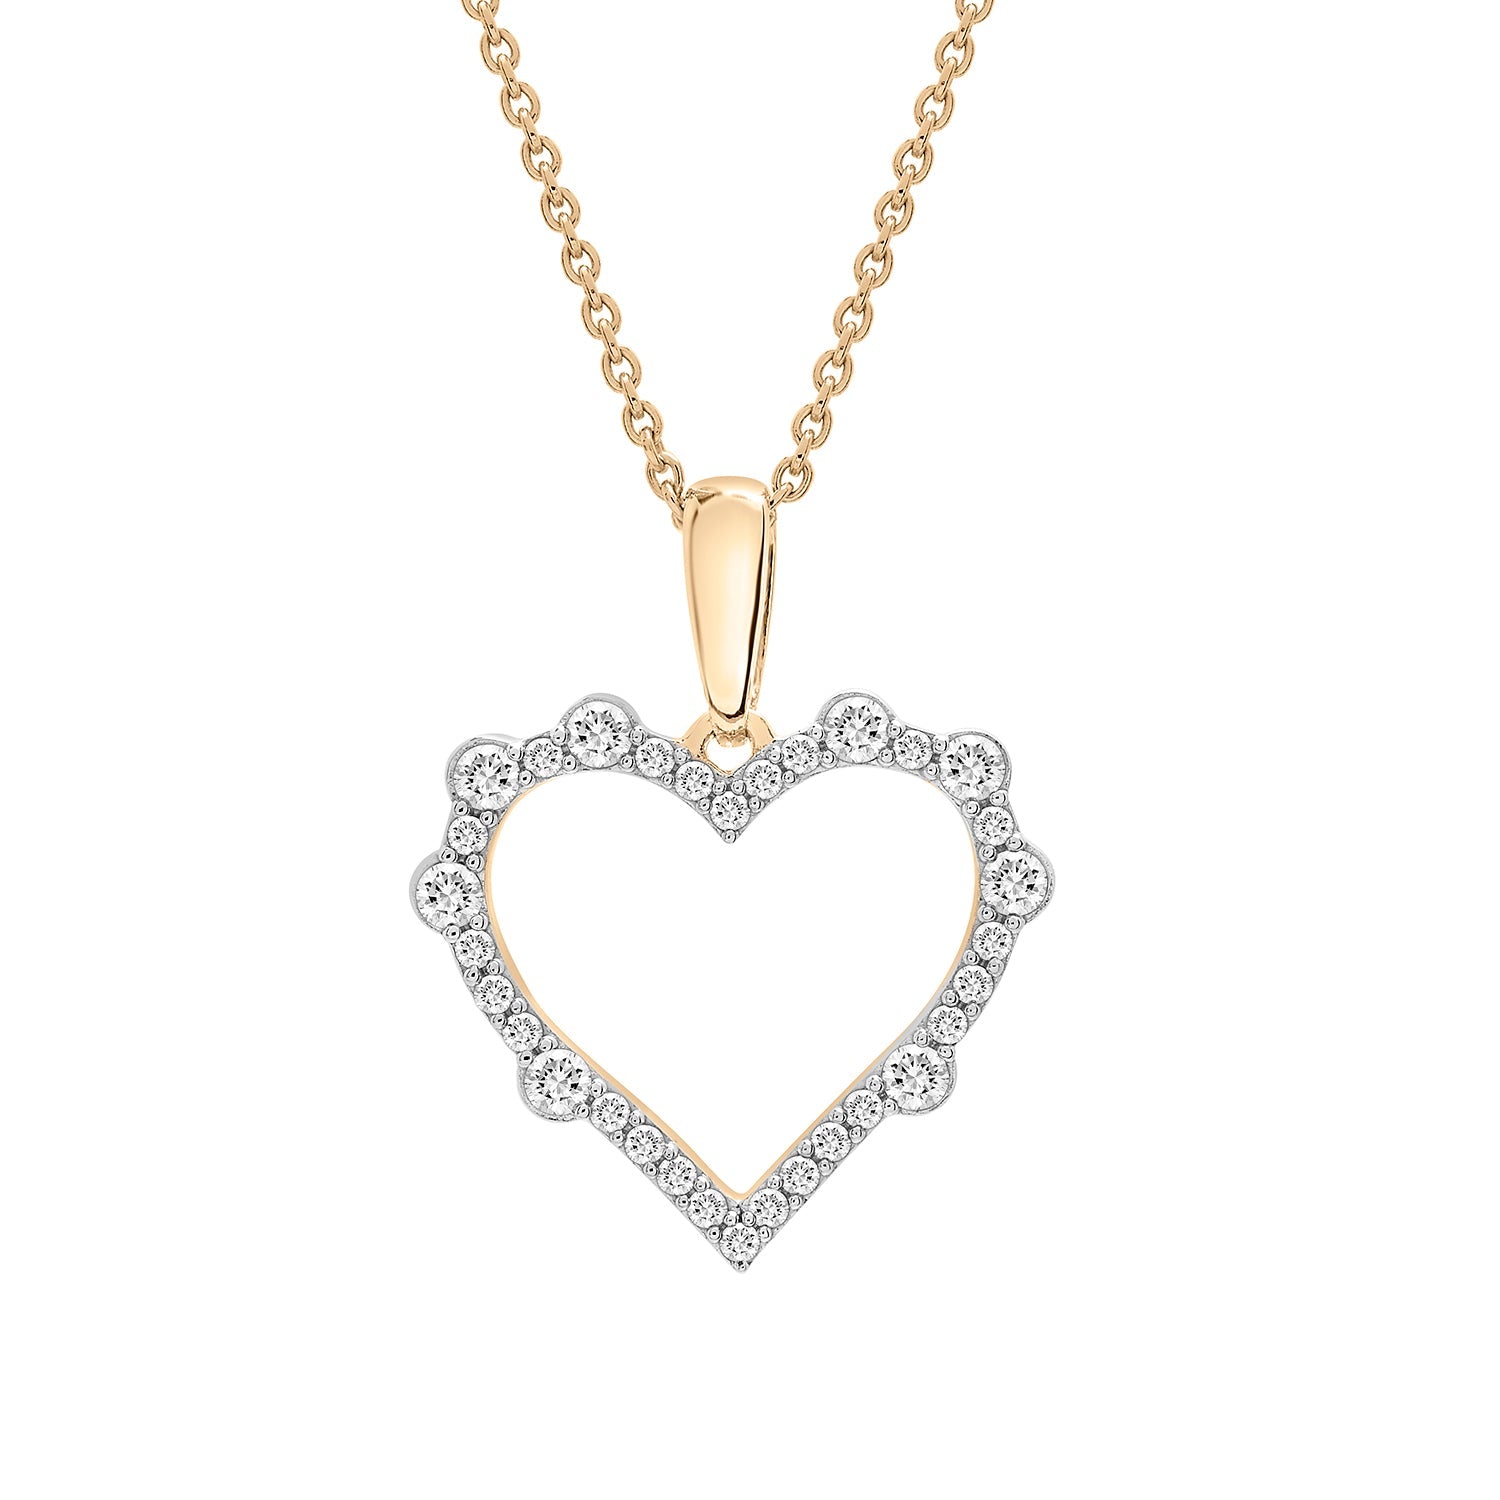 L'Amour Diamond Heart Pendant With Gold Chain Silver Pendant 